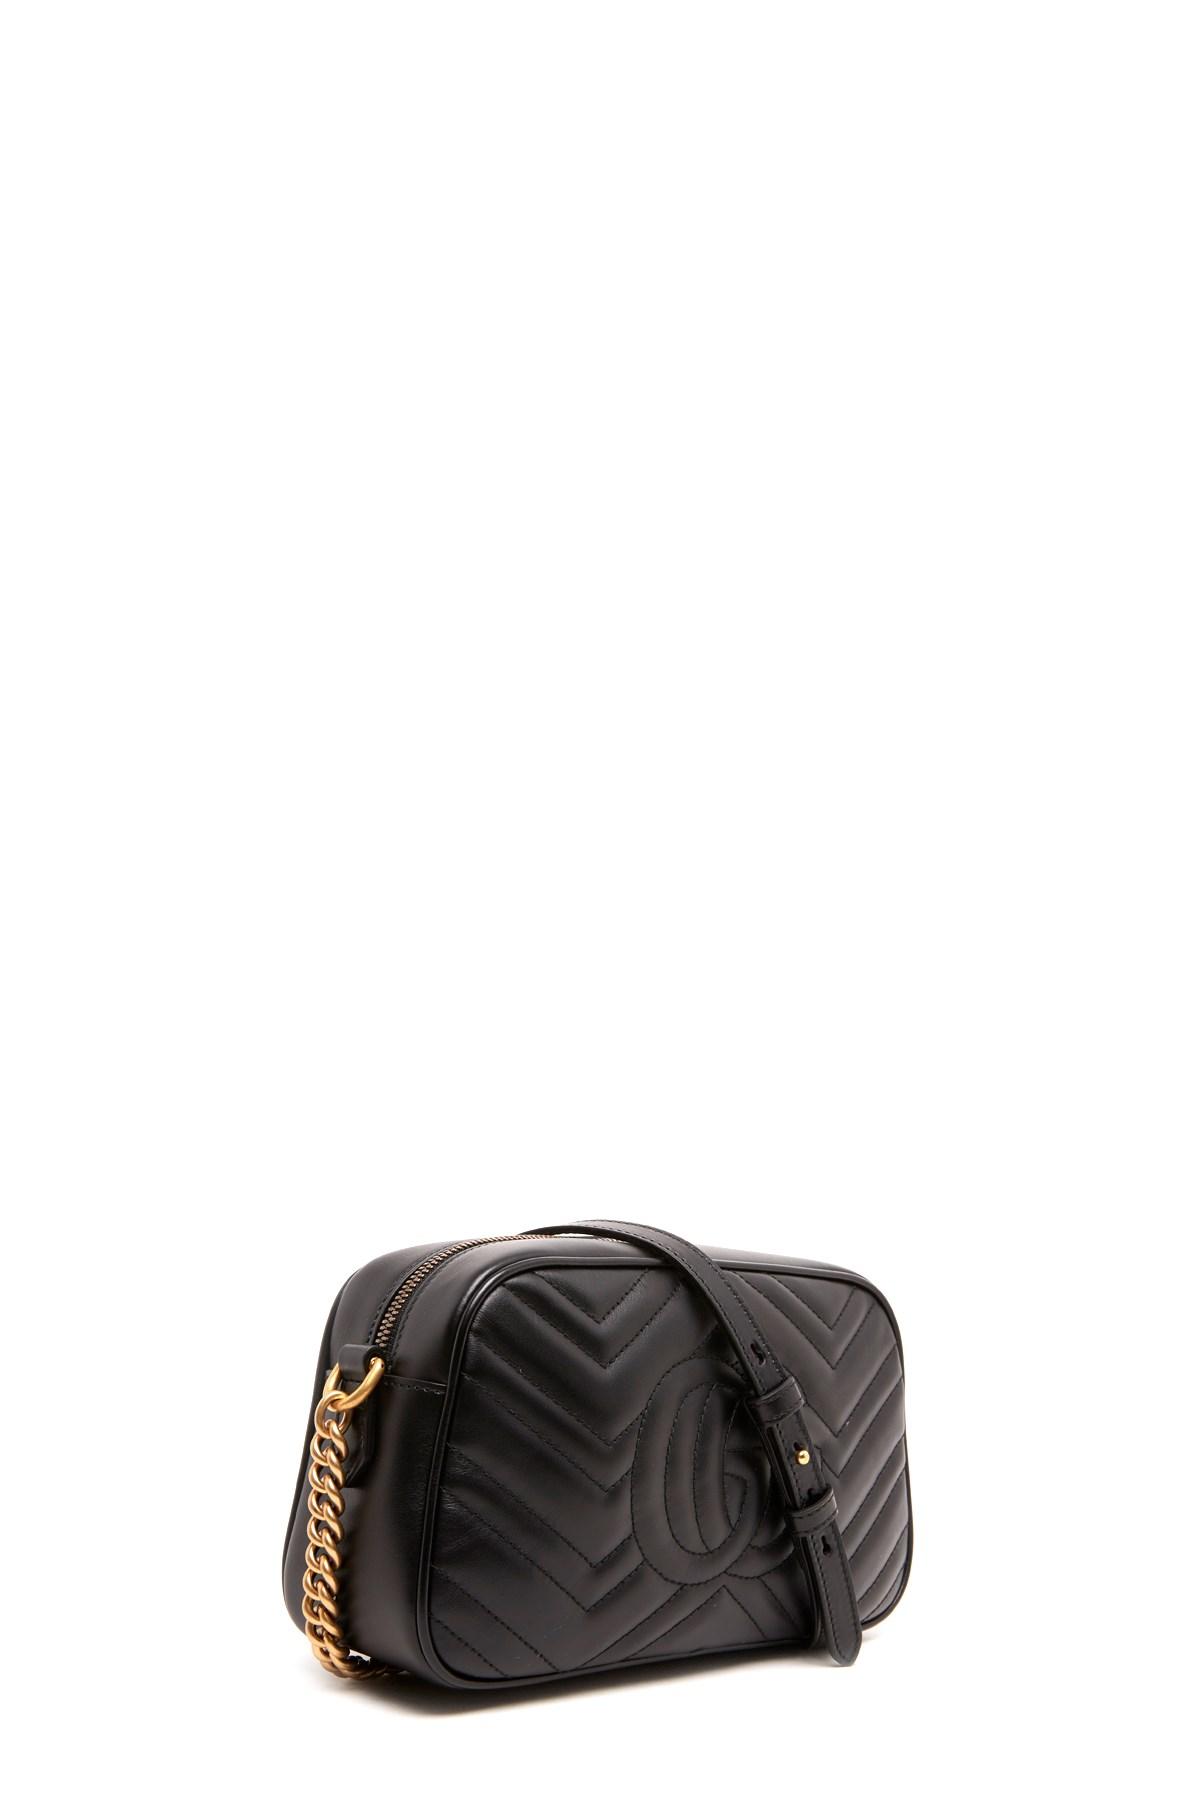 Gucci &#39;GG Marmont 2.0 Camera&#39; Crossbody Bag in Black - Lyst